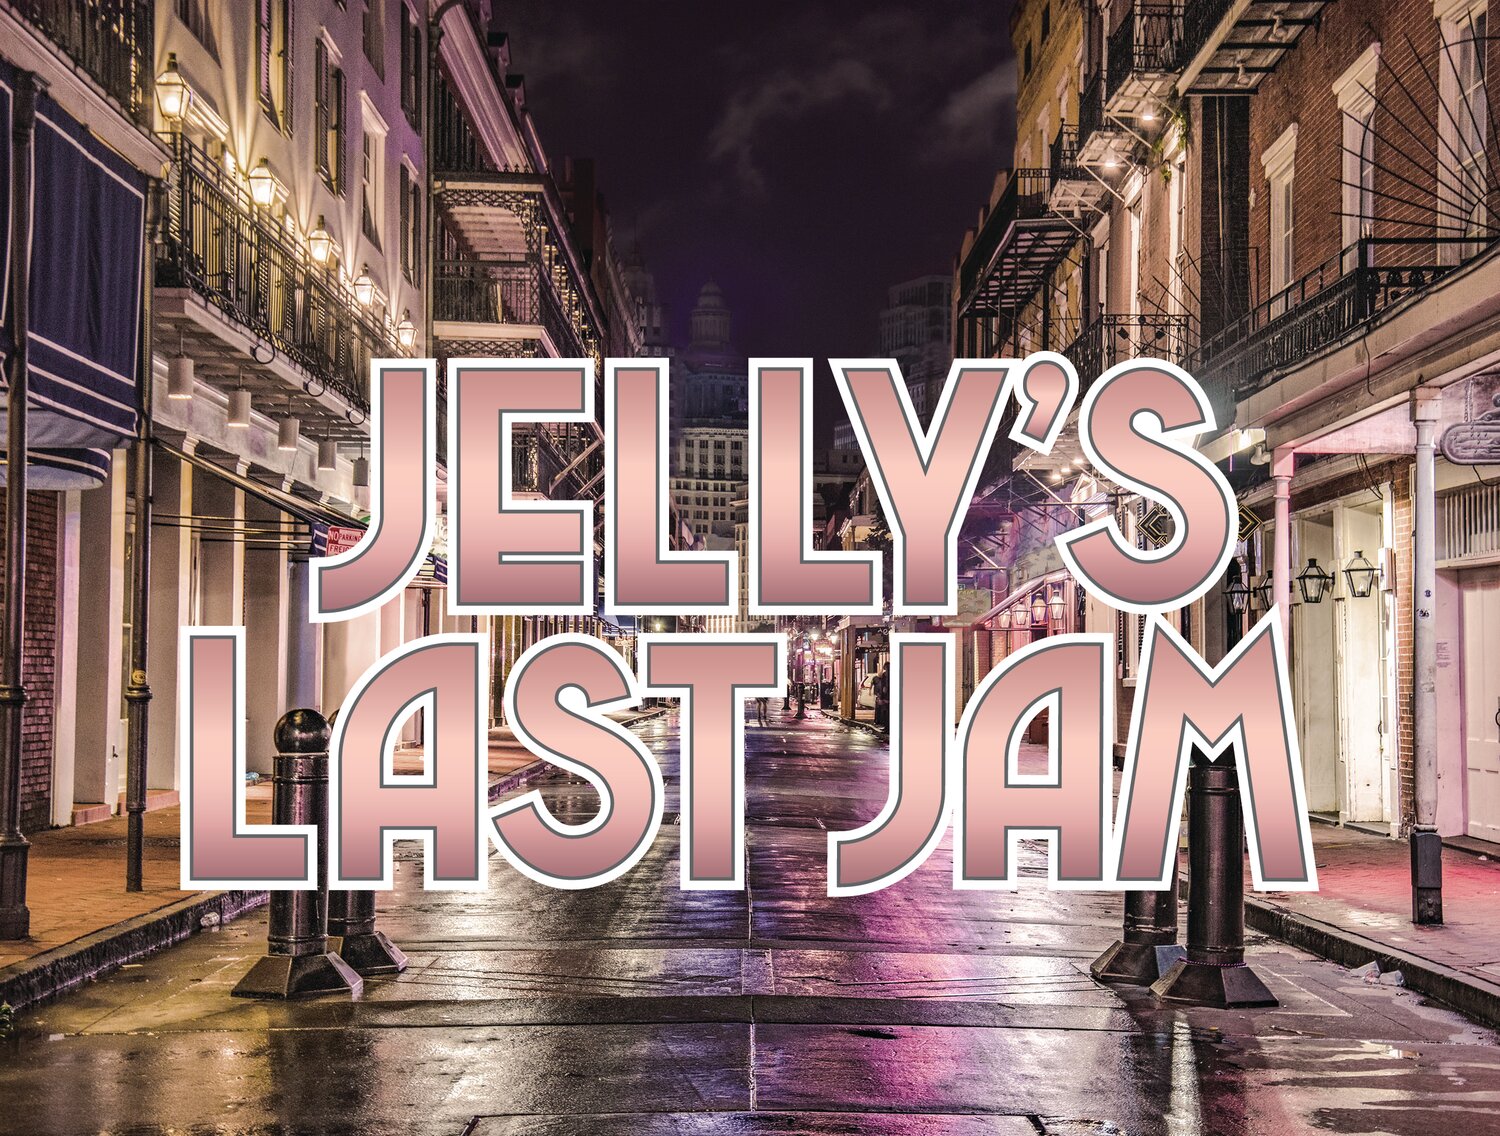 'Jelly’s Last Jam' will run through May 28 on Wednesdays through Sundays at Cape Fear Regional Theatre.